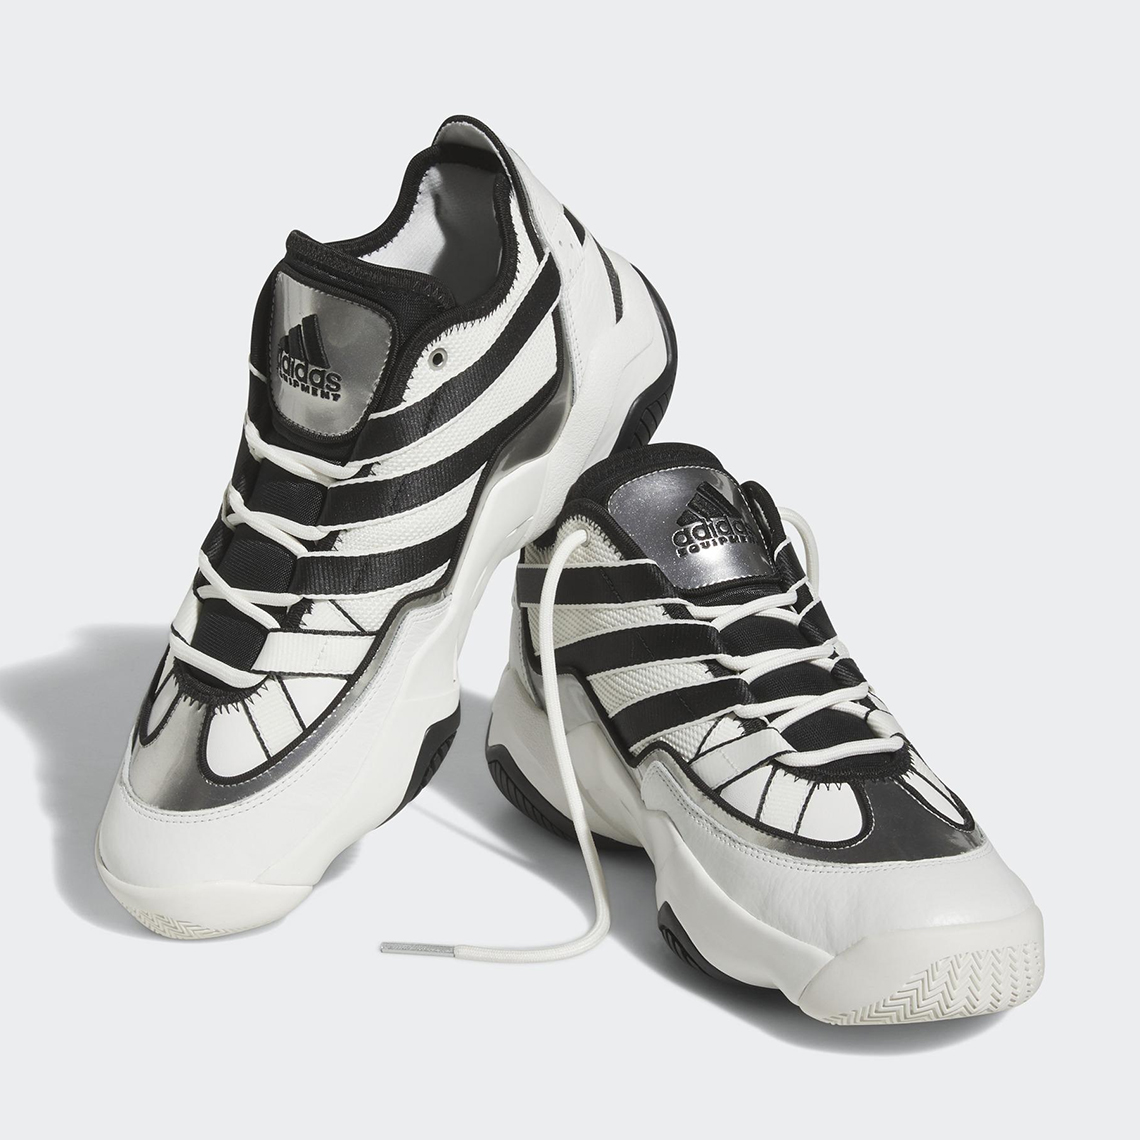 Adidas Top Ten 2010 White Black Silver Hr0099 5